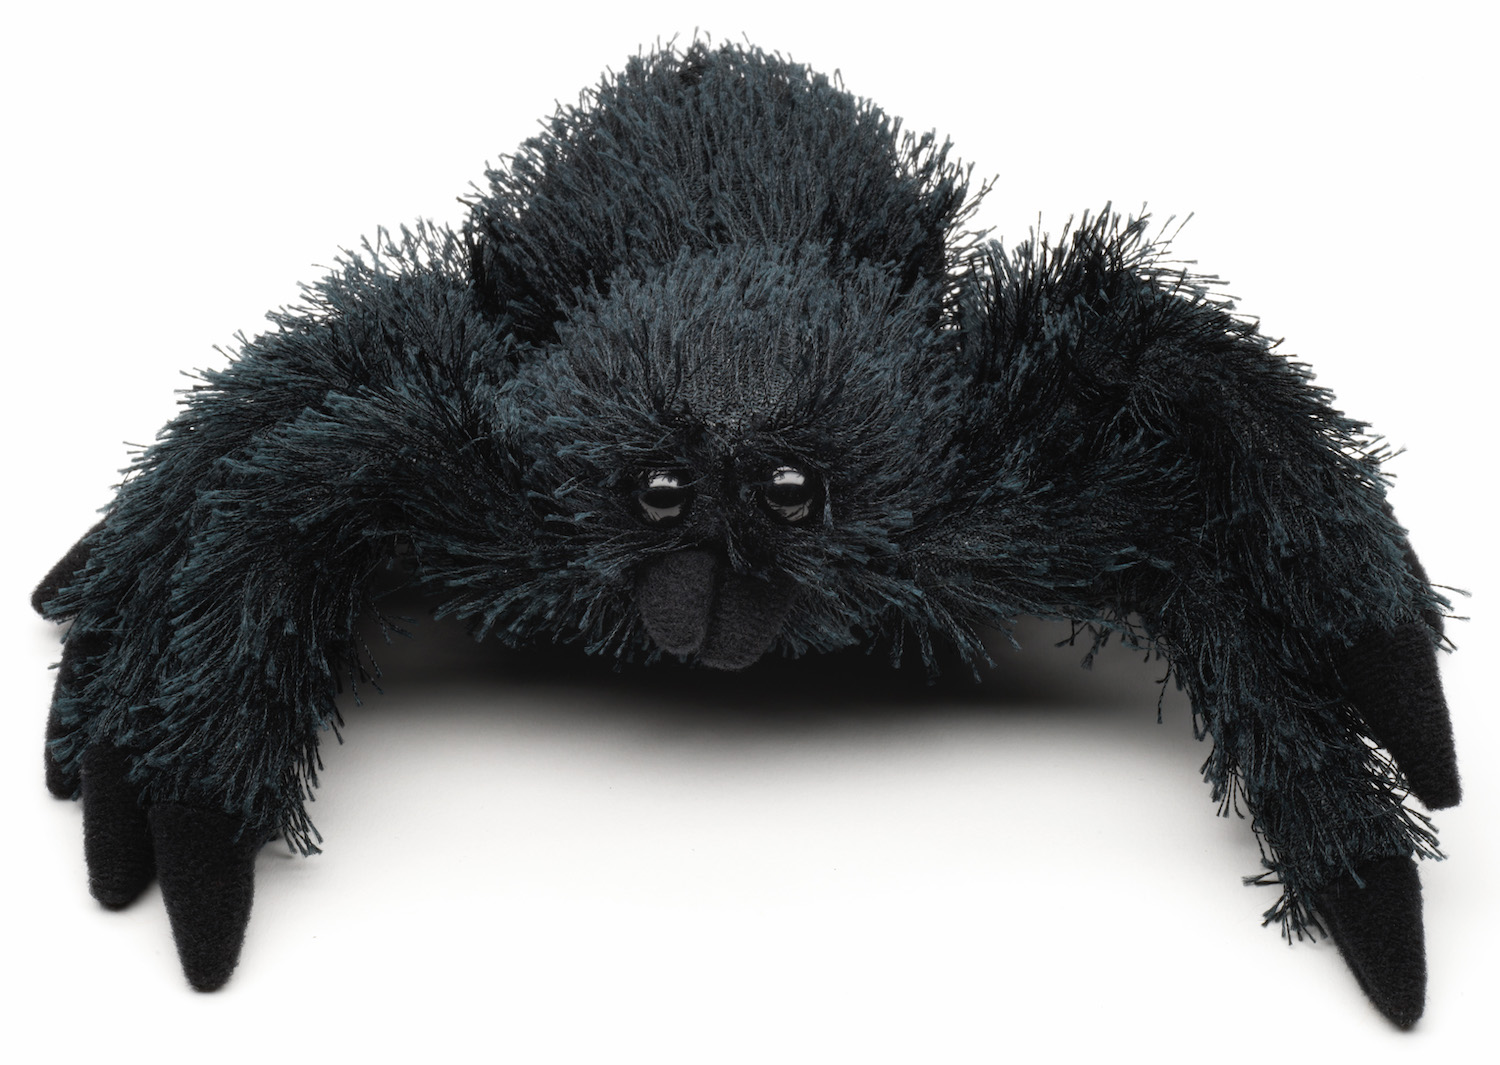 Black spider - 15 cm (length)